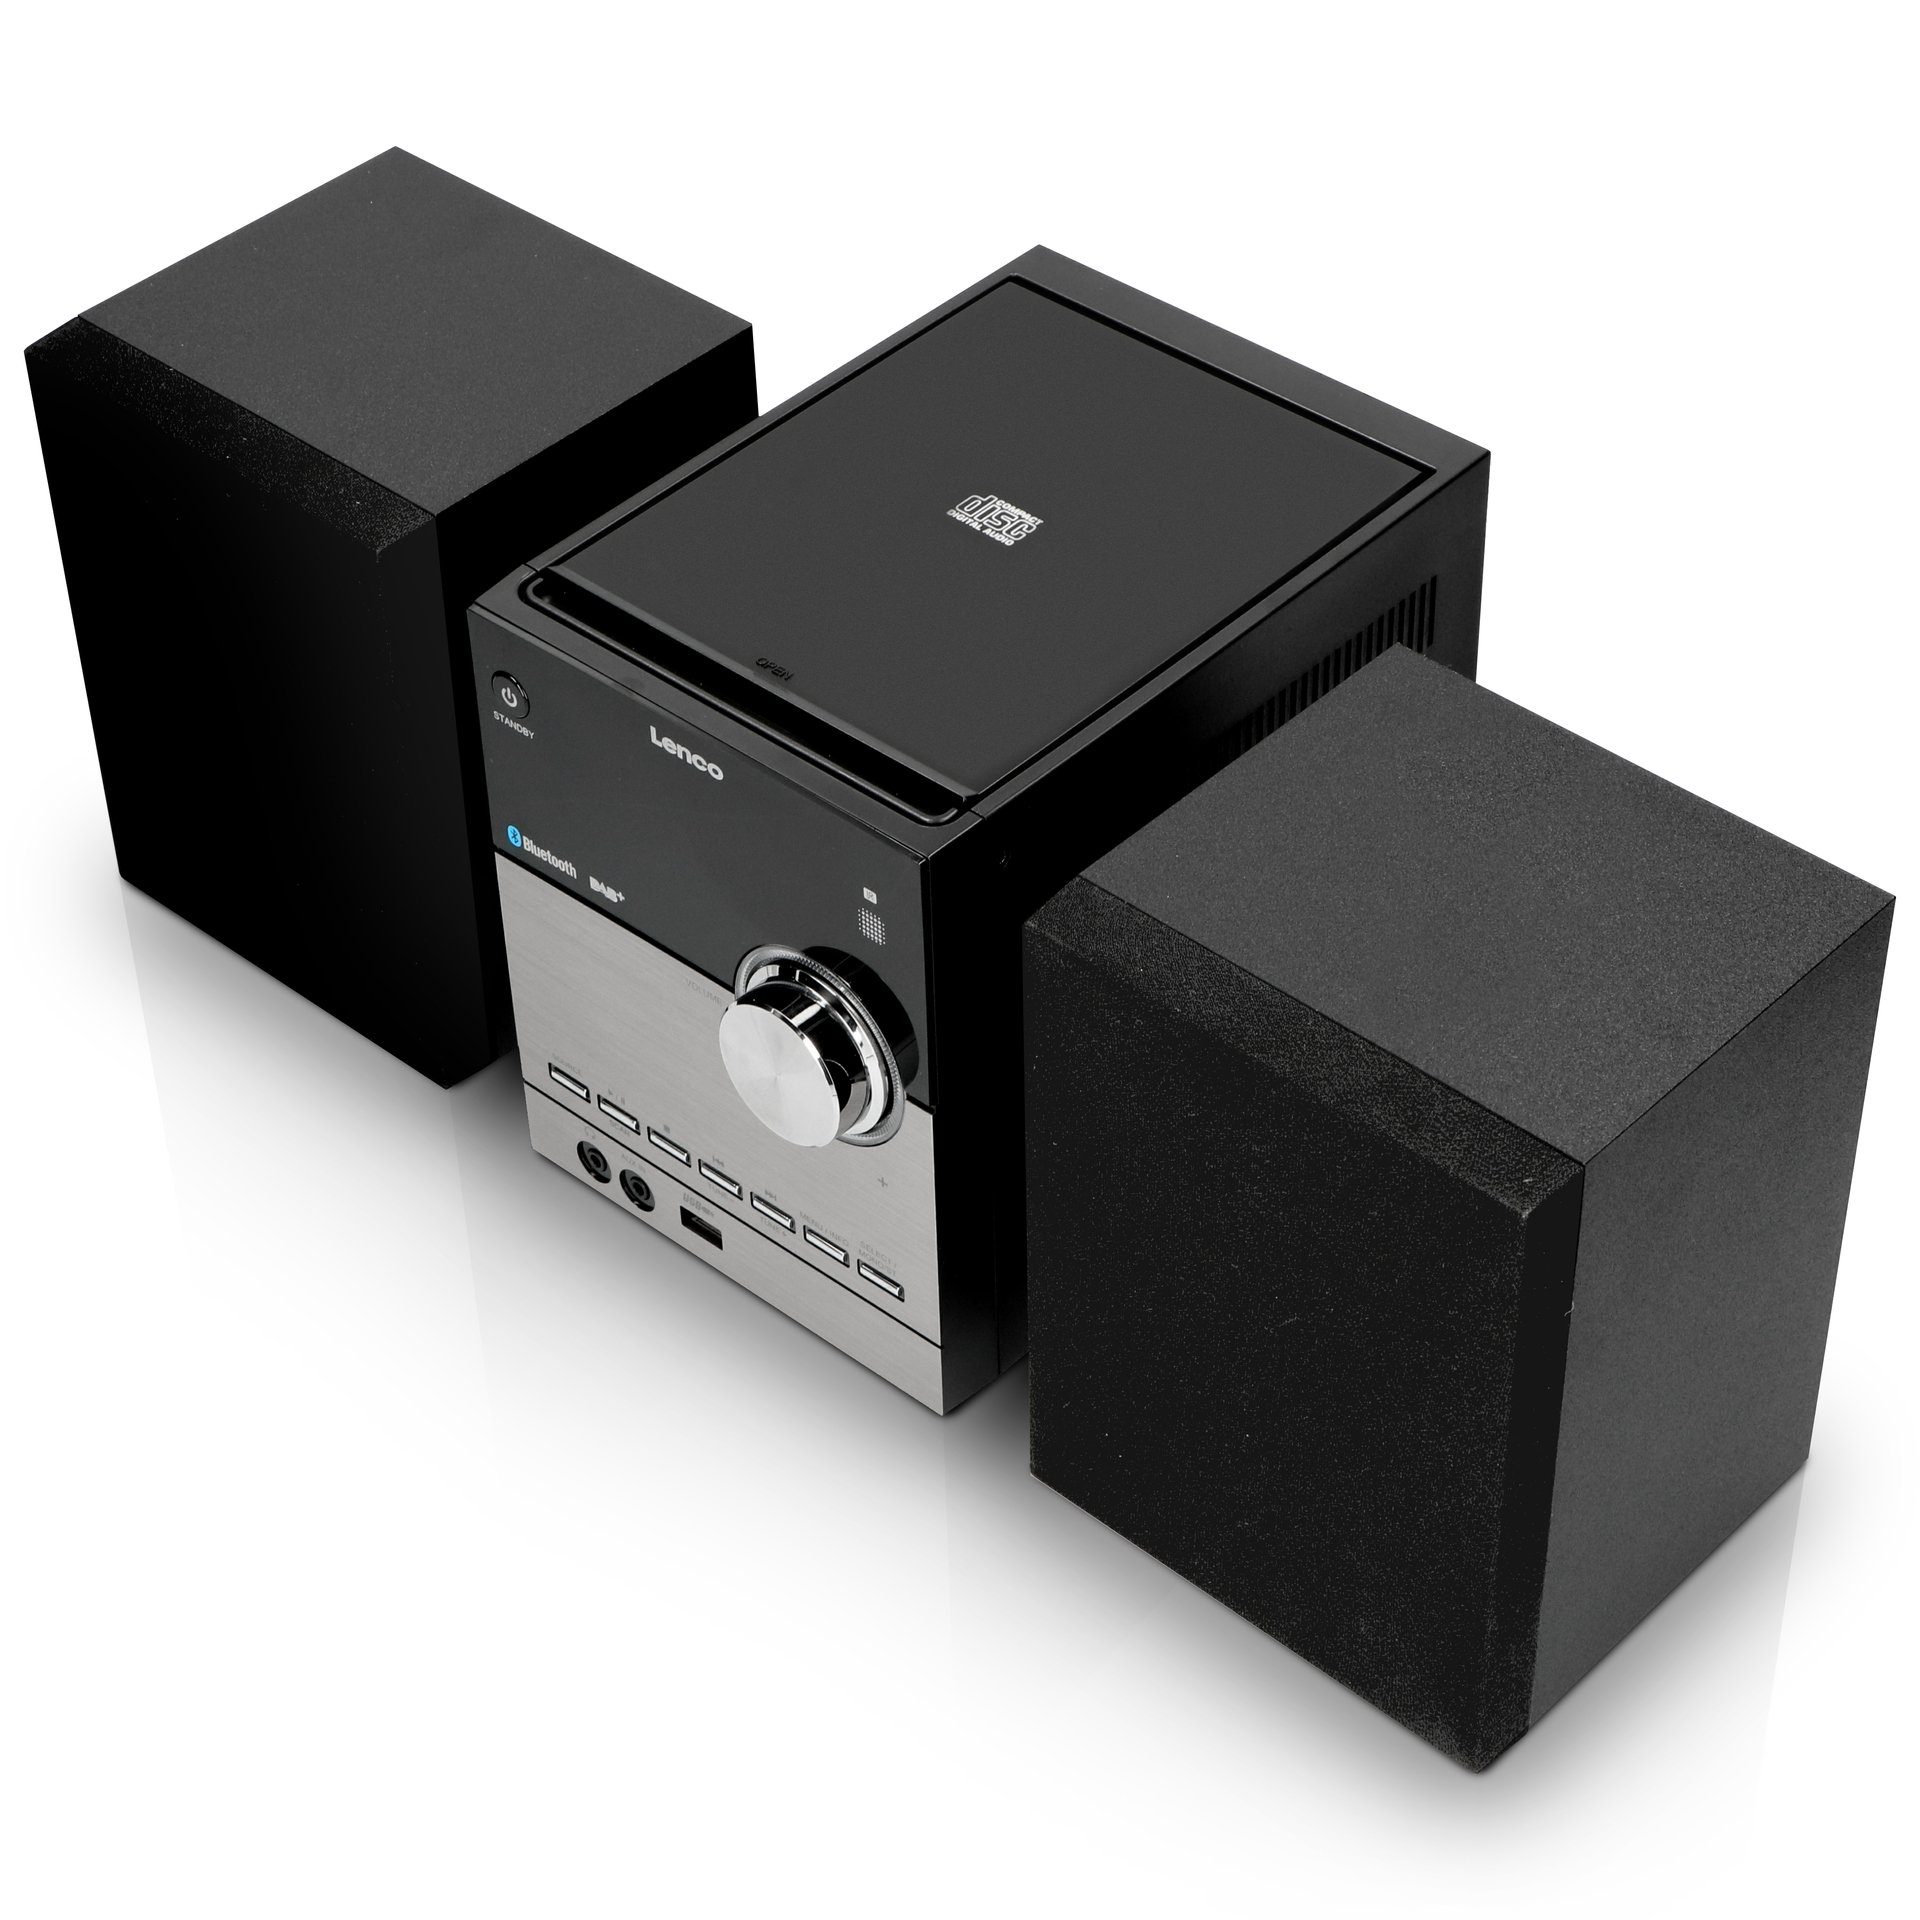 10 DAB+, W) (DAB), (Digitalradio FM, mit CD, Microanlage BT, USB Micro MC-150 Stereoanlage Lenco